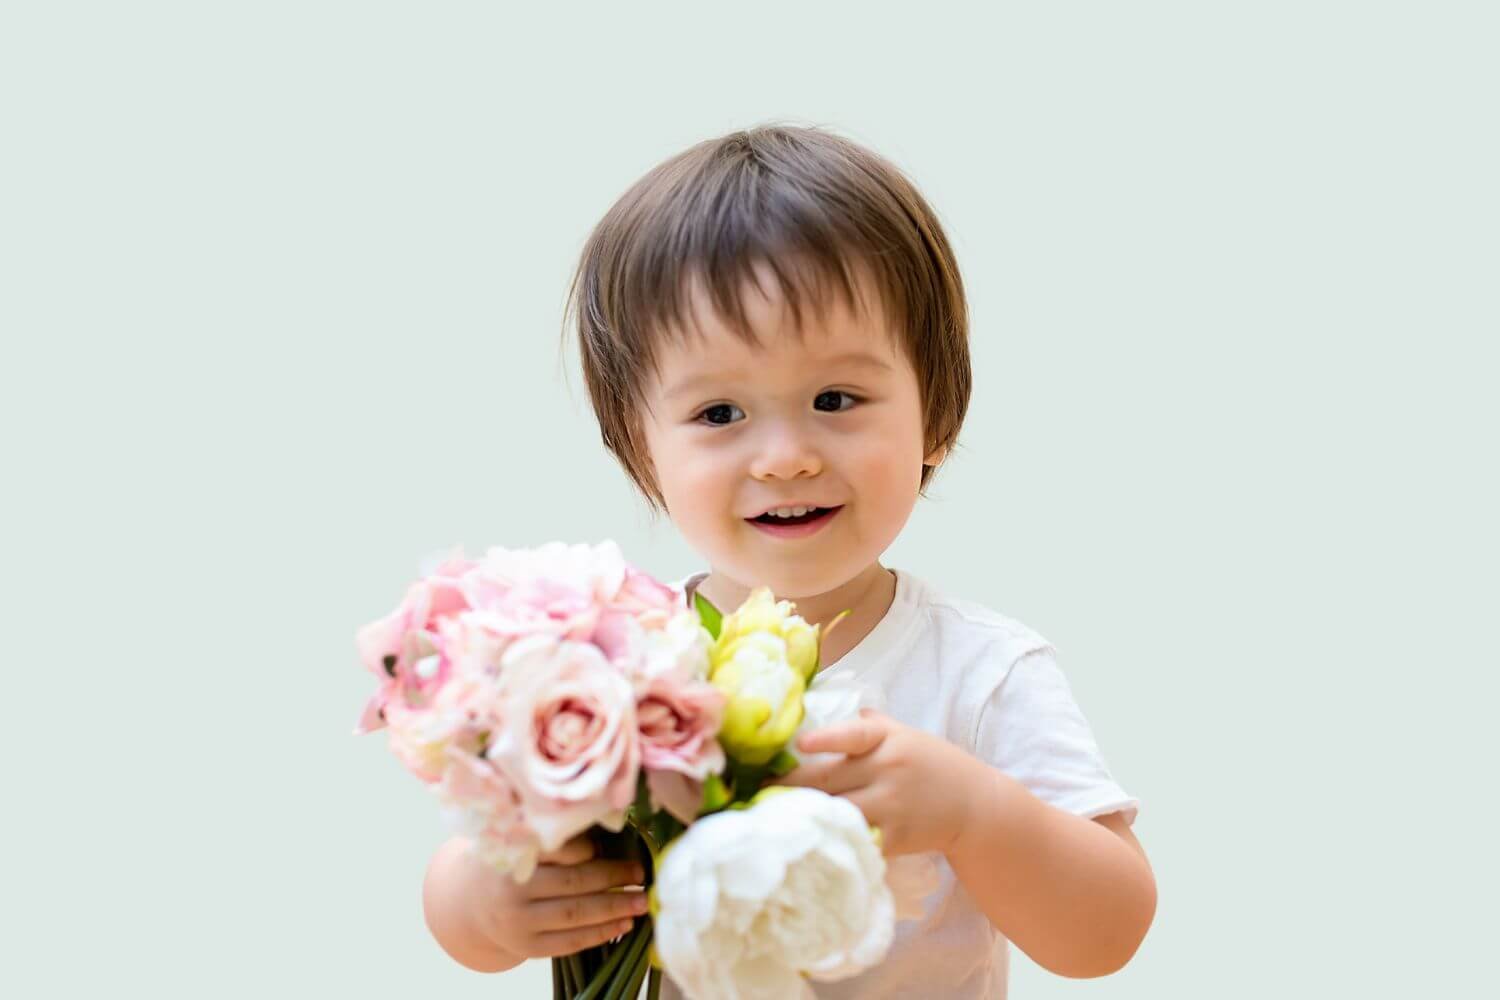 little boy holding flower bouquet